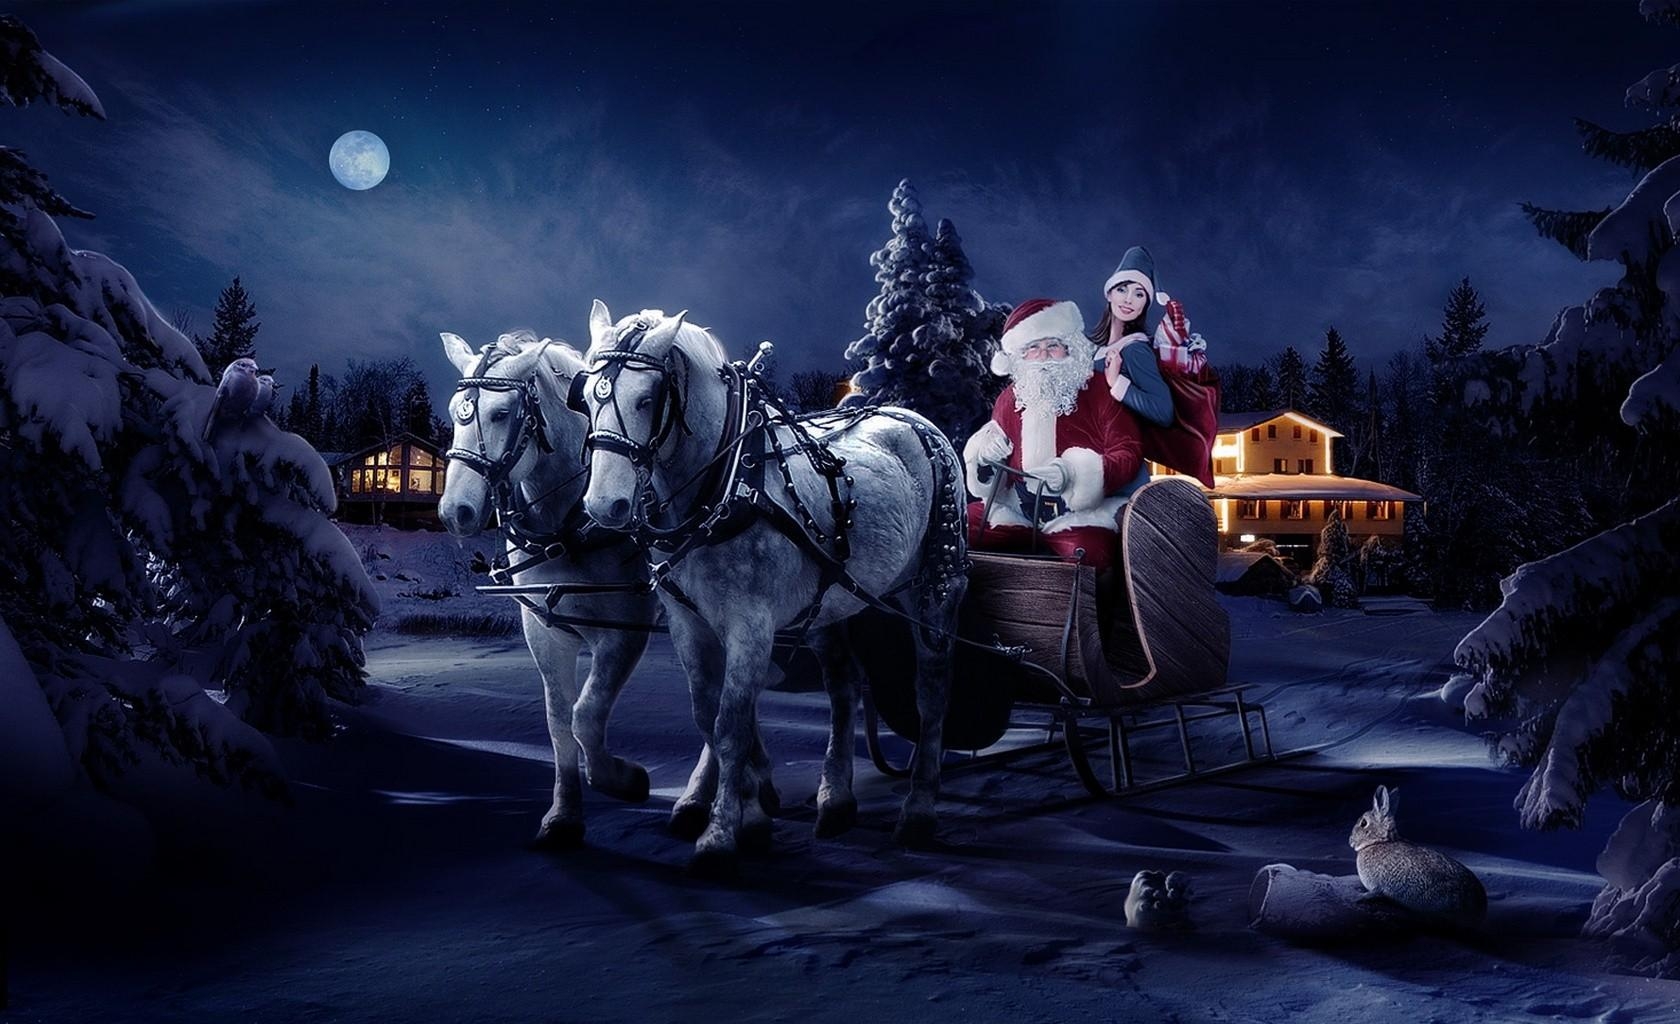 horses, holidays, santa claus, night, fir trees, christmas, girl, bag, sleigh, sledge, sack, presents, gifts